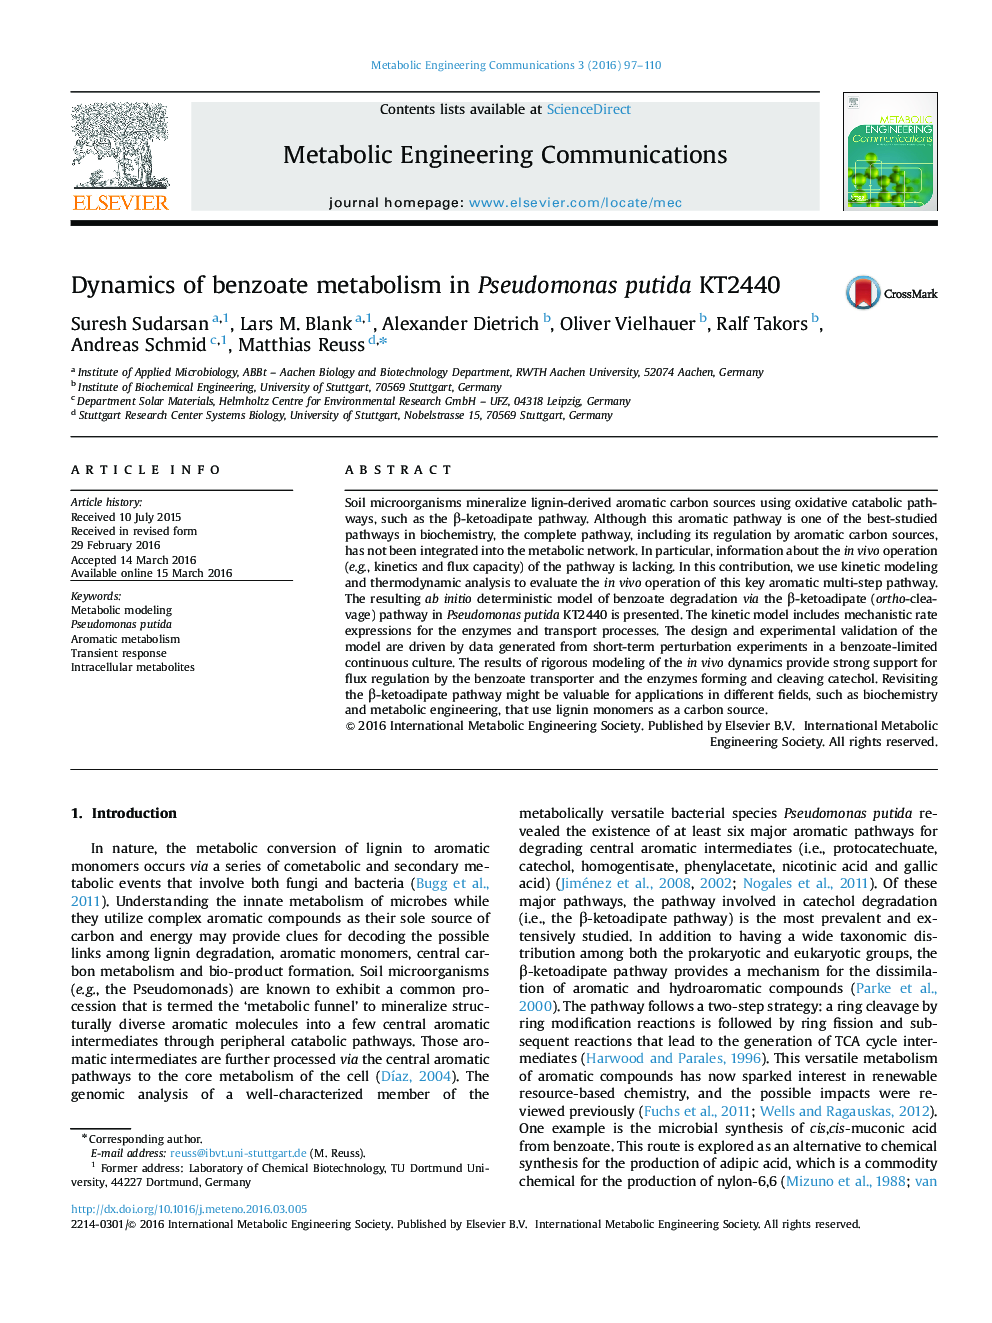 Dynamics of benzoate metabolism in Pseudomonas putida KT2440